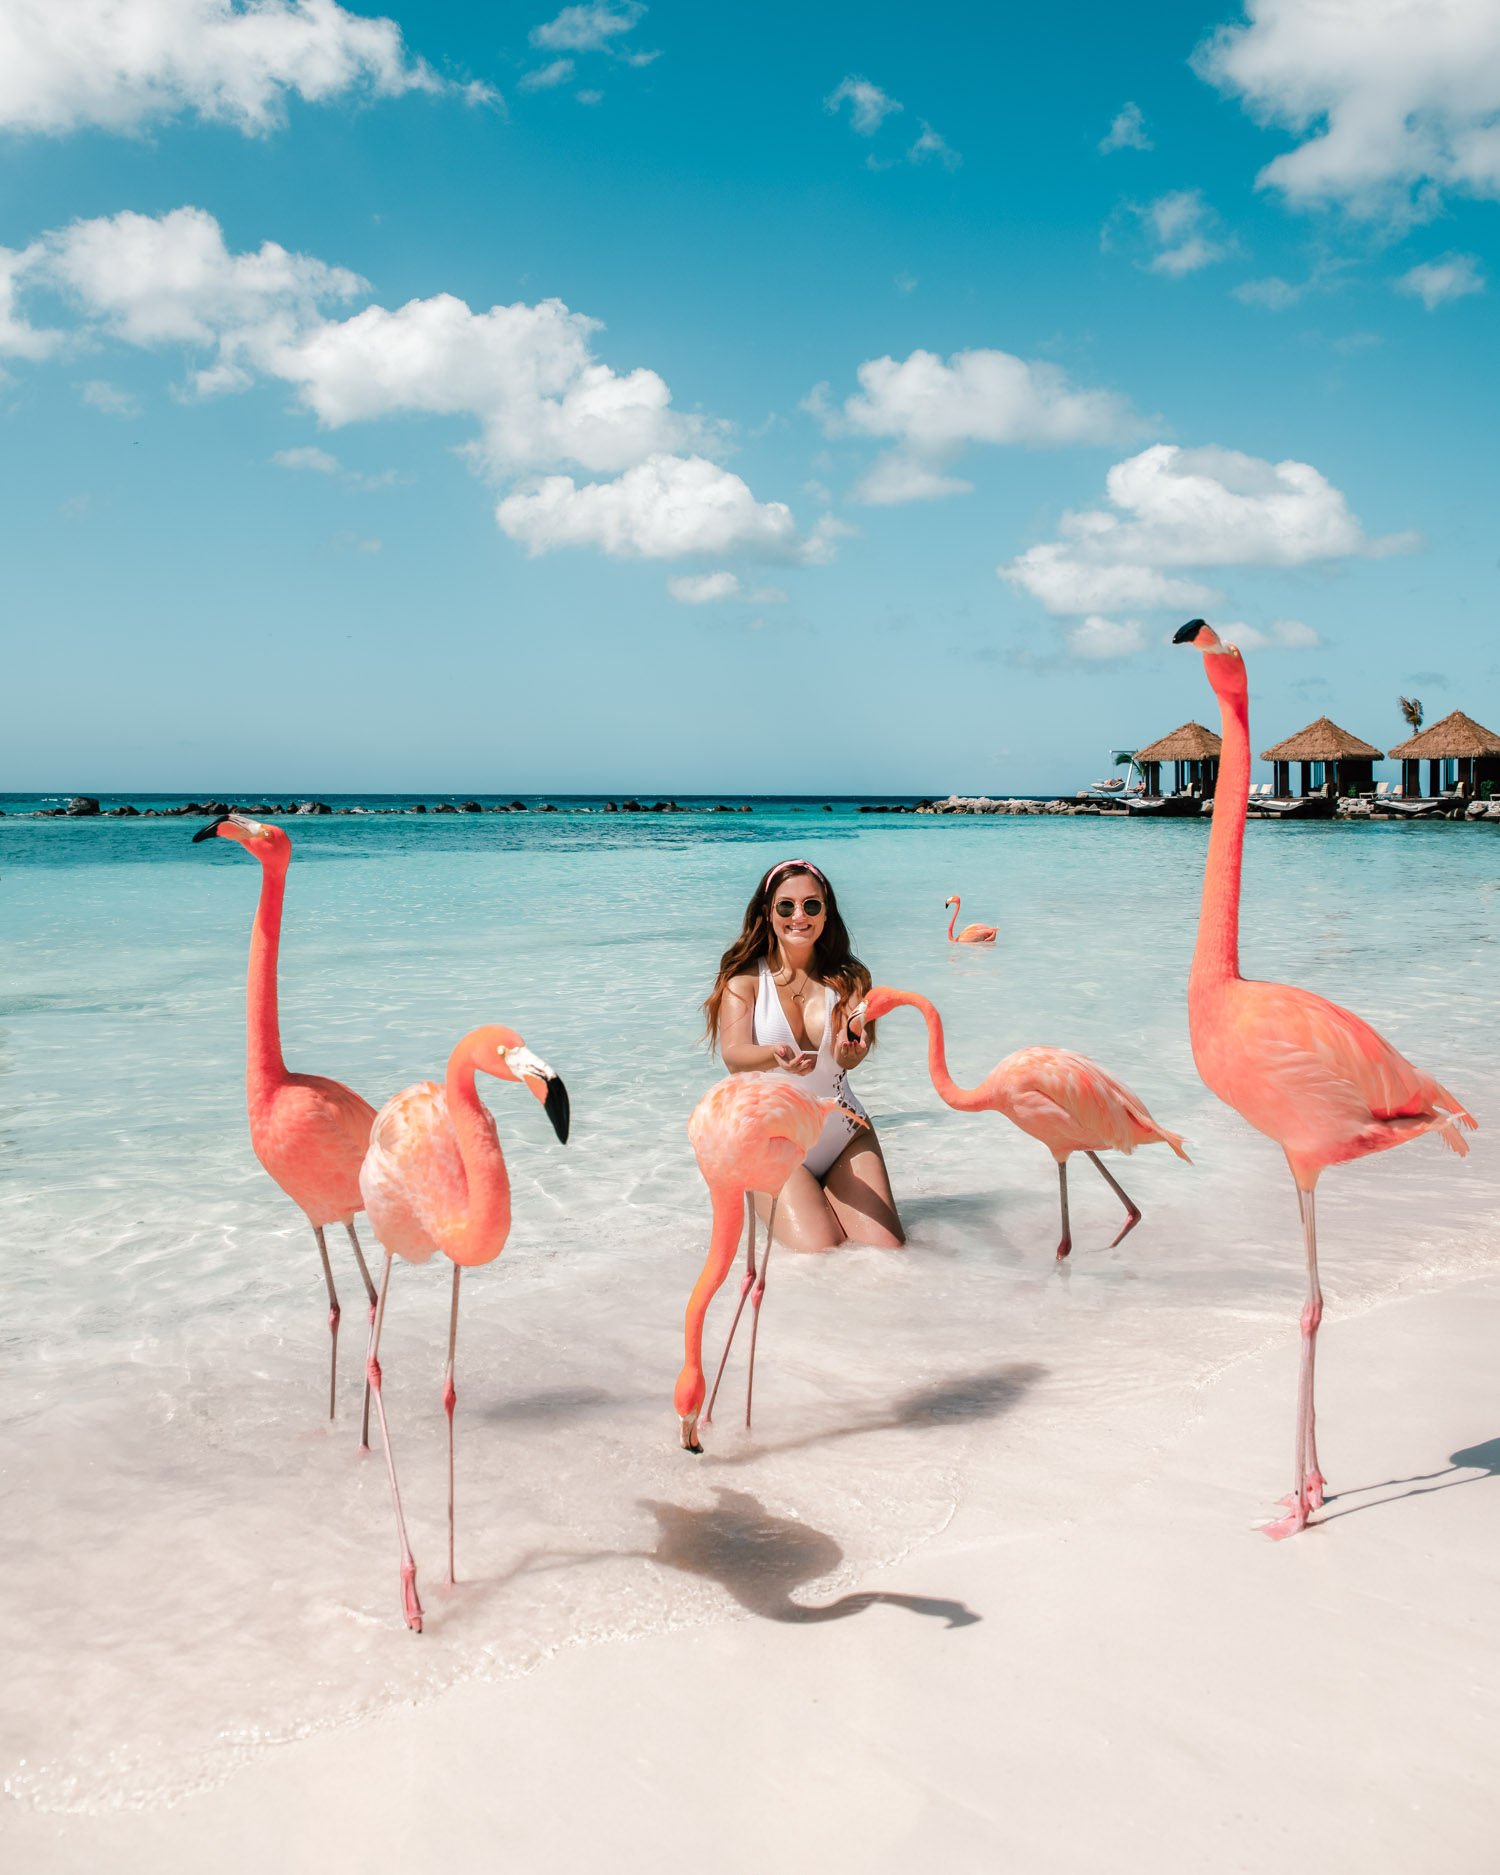 Flamingo Beach, Renaissance Private Island | The Ultimate Aruba Travel Guide